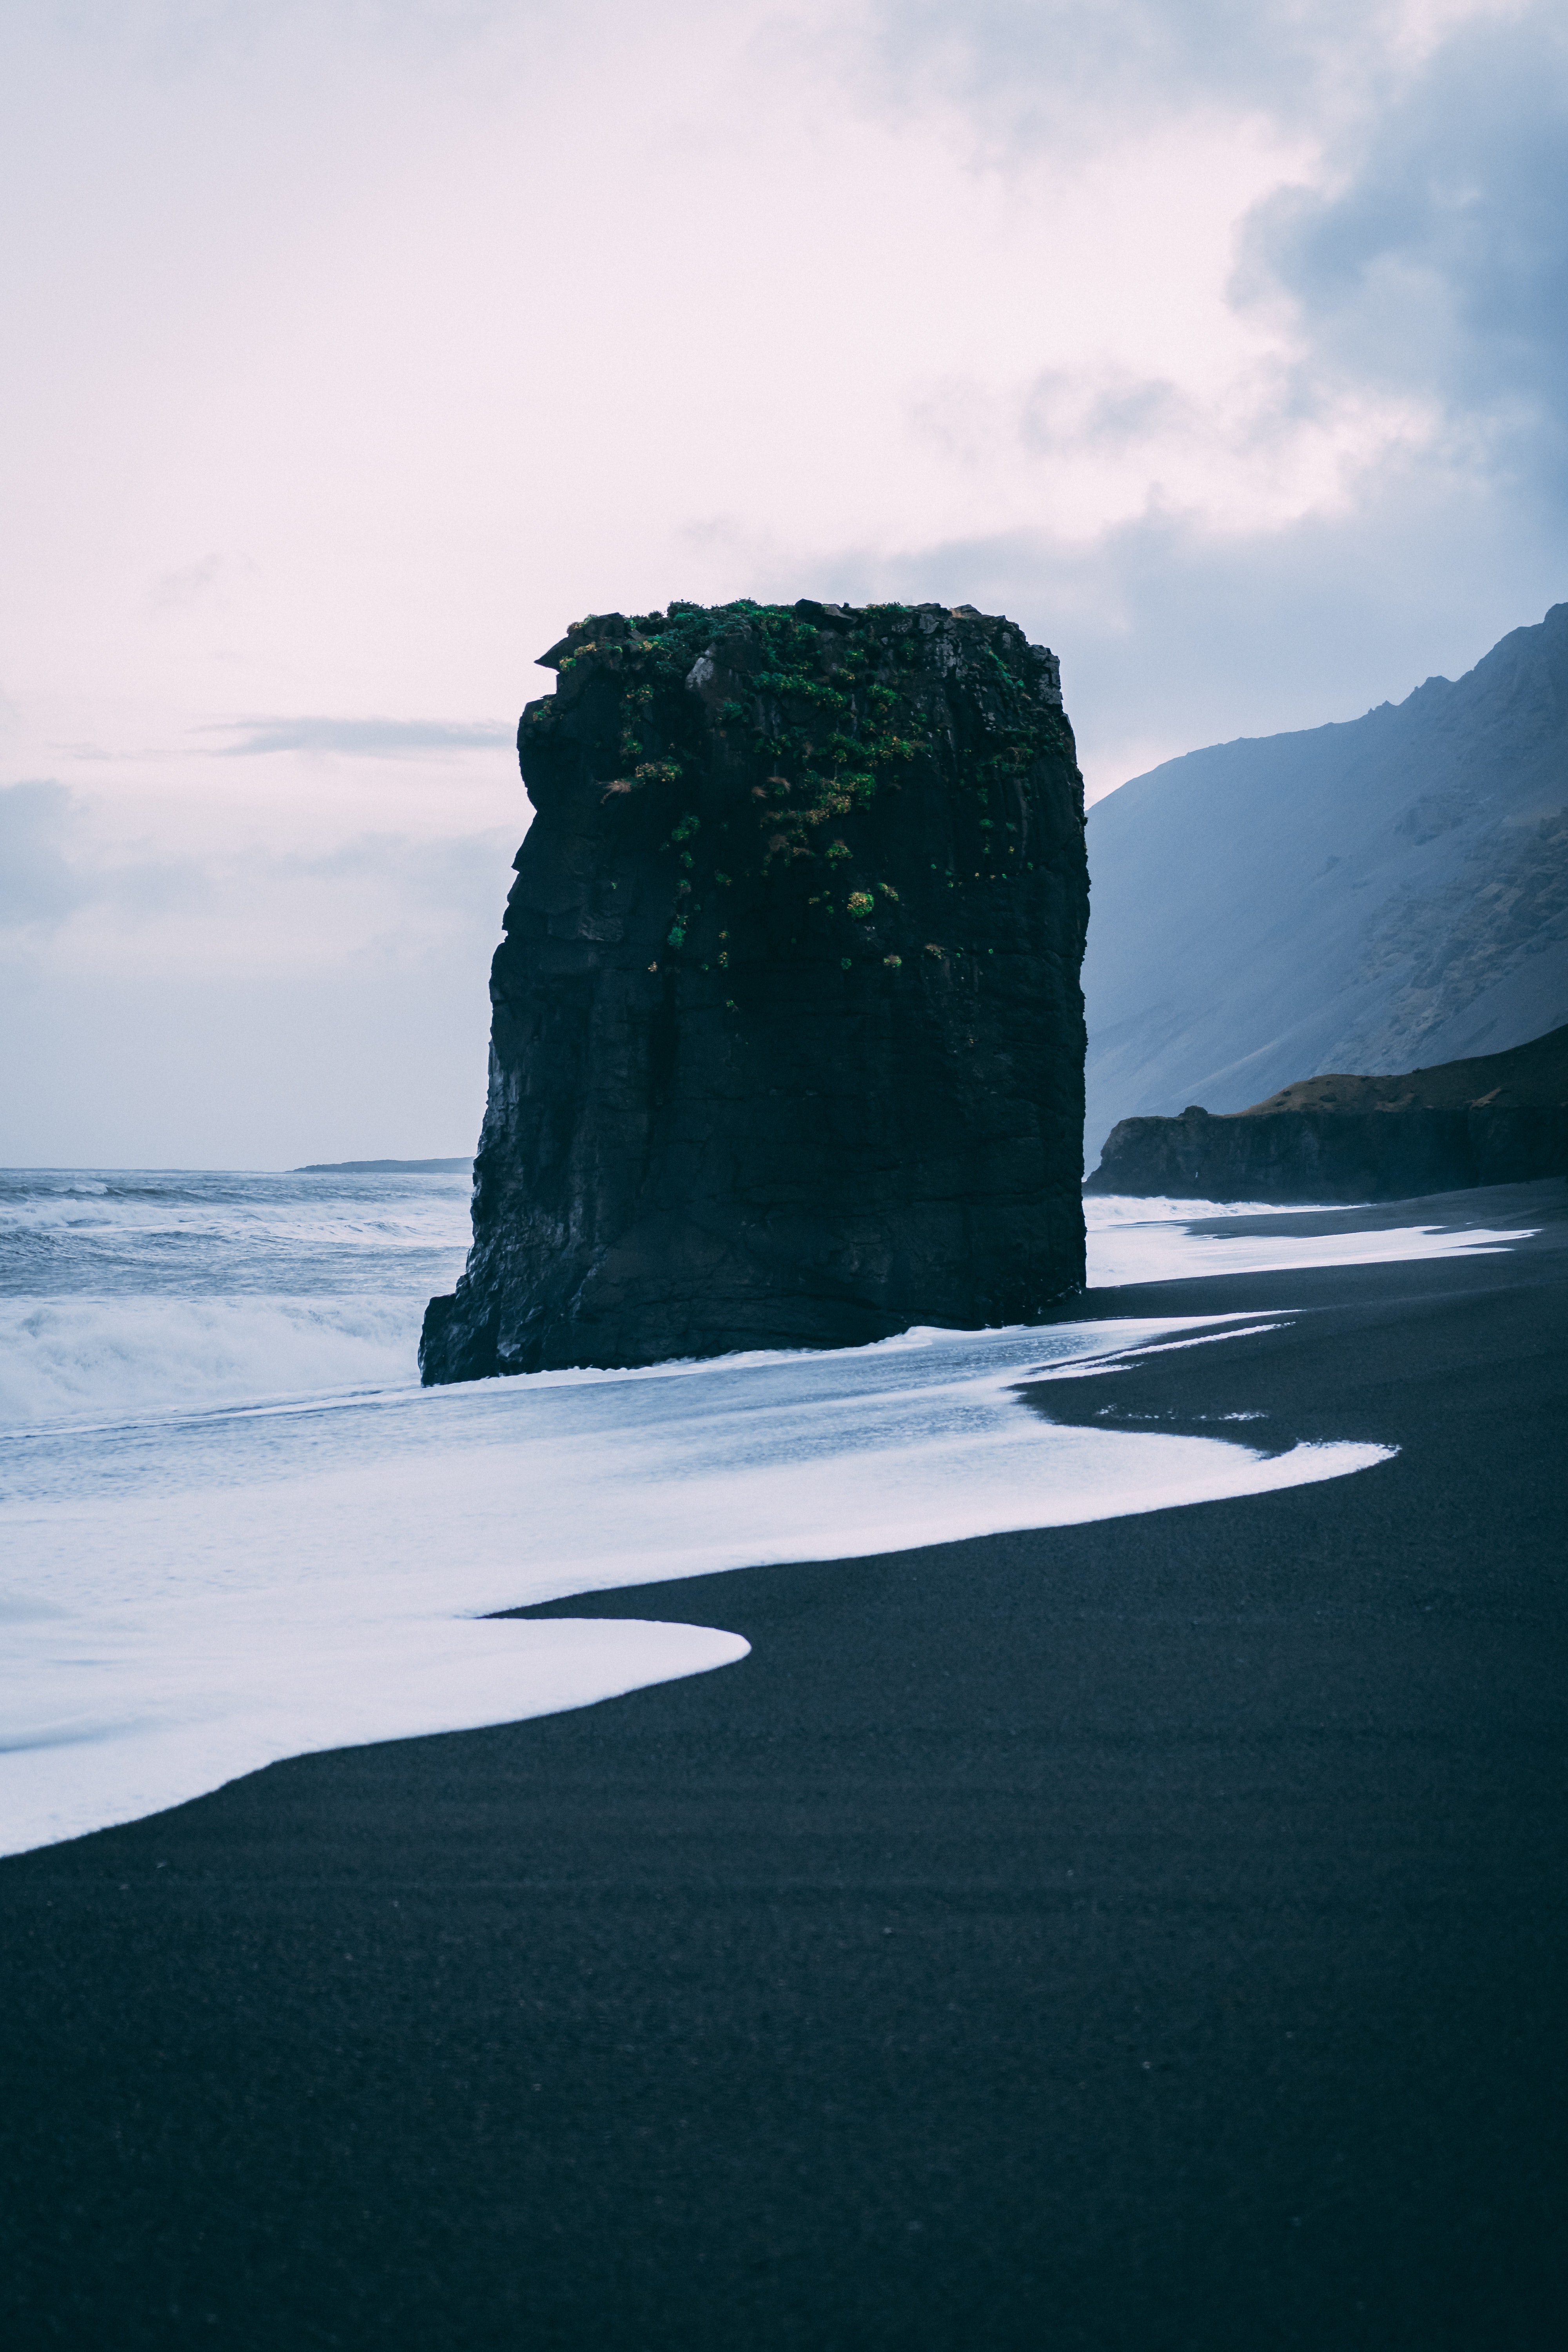 A black rock formation near the sea